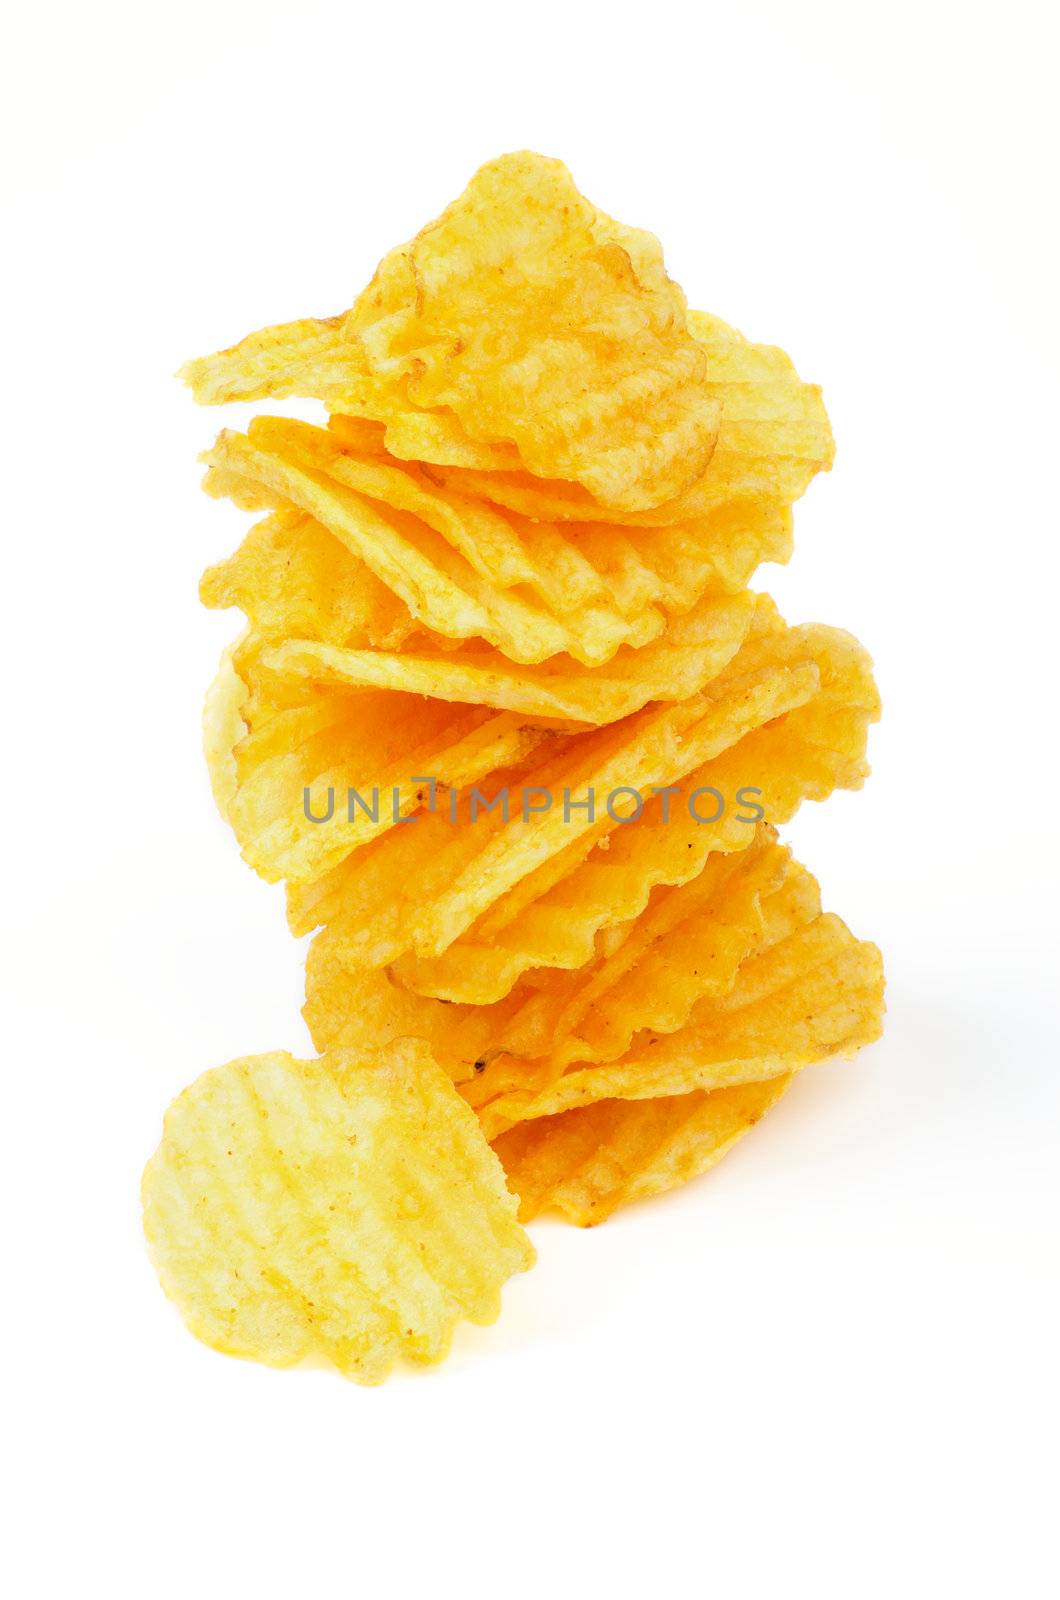 Potato Chips by zhekos